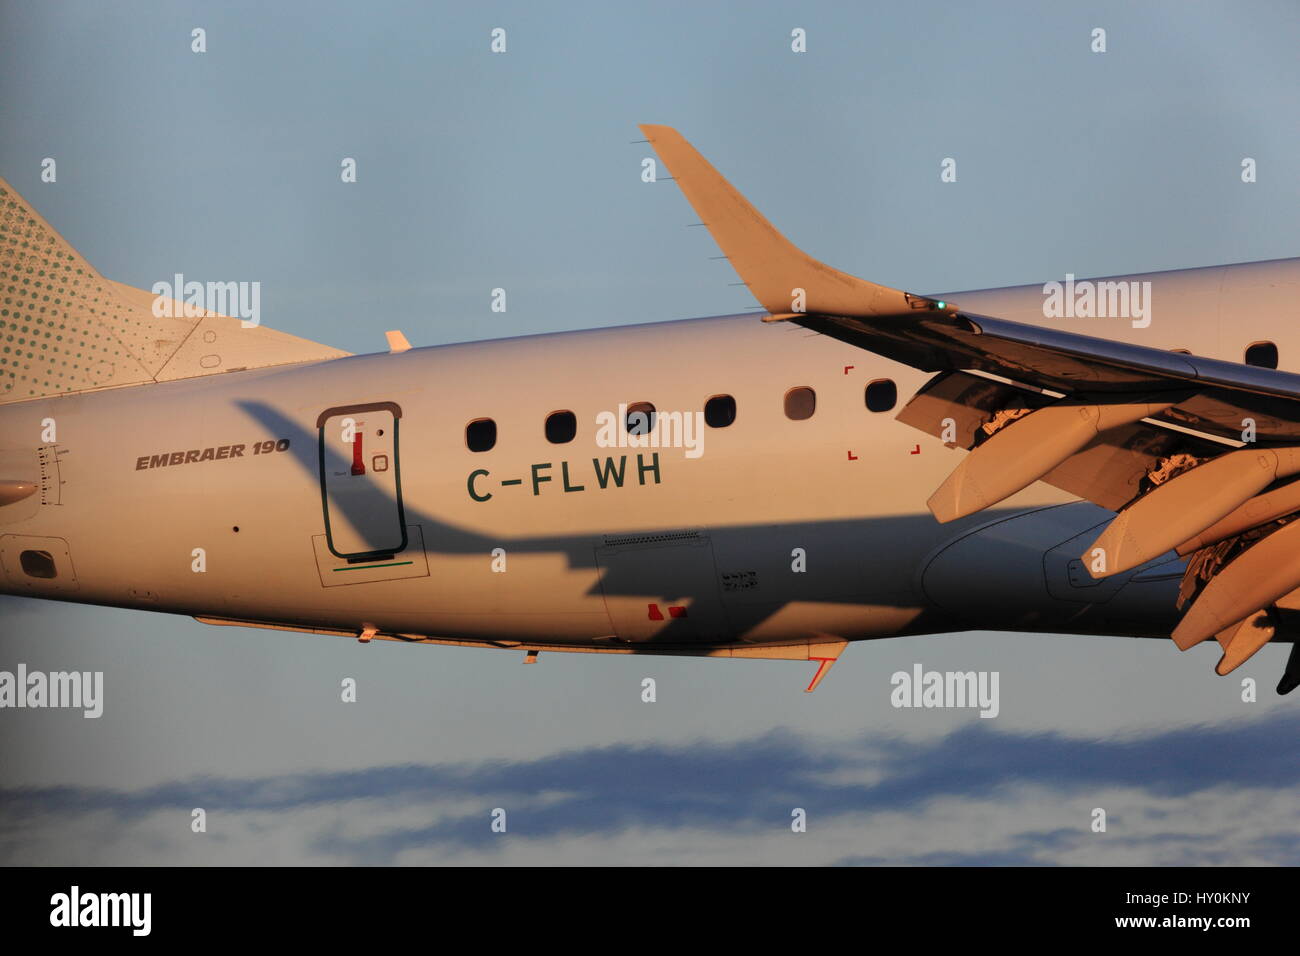 Embraer E190 C-FLWH Air Canada landing at YOW, Ottawa International Airport, June 04, 2015. Stock Photo